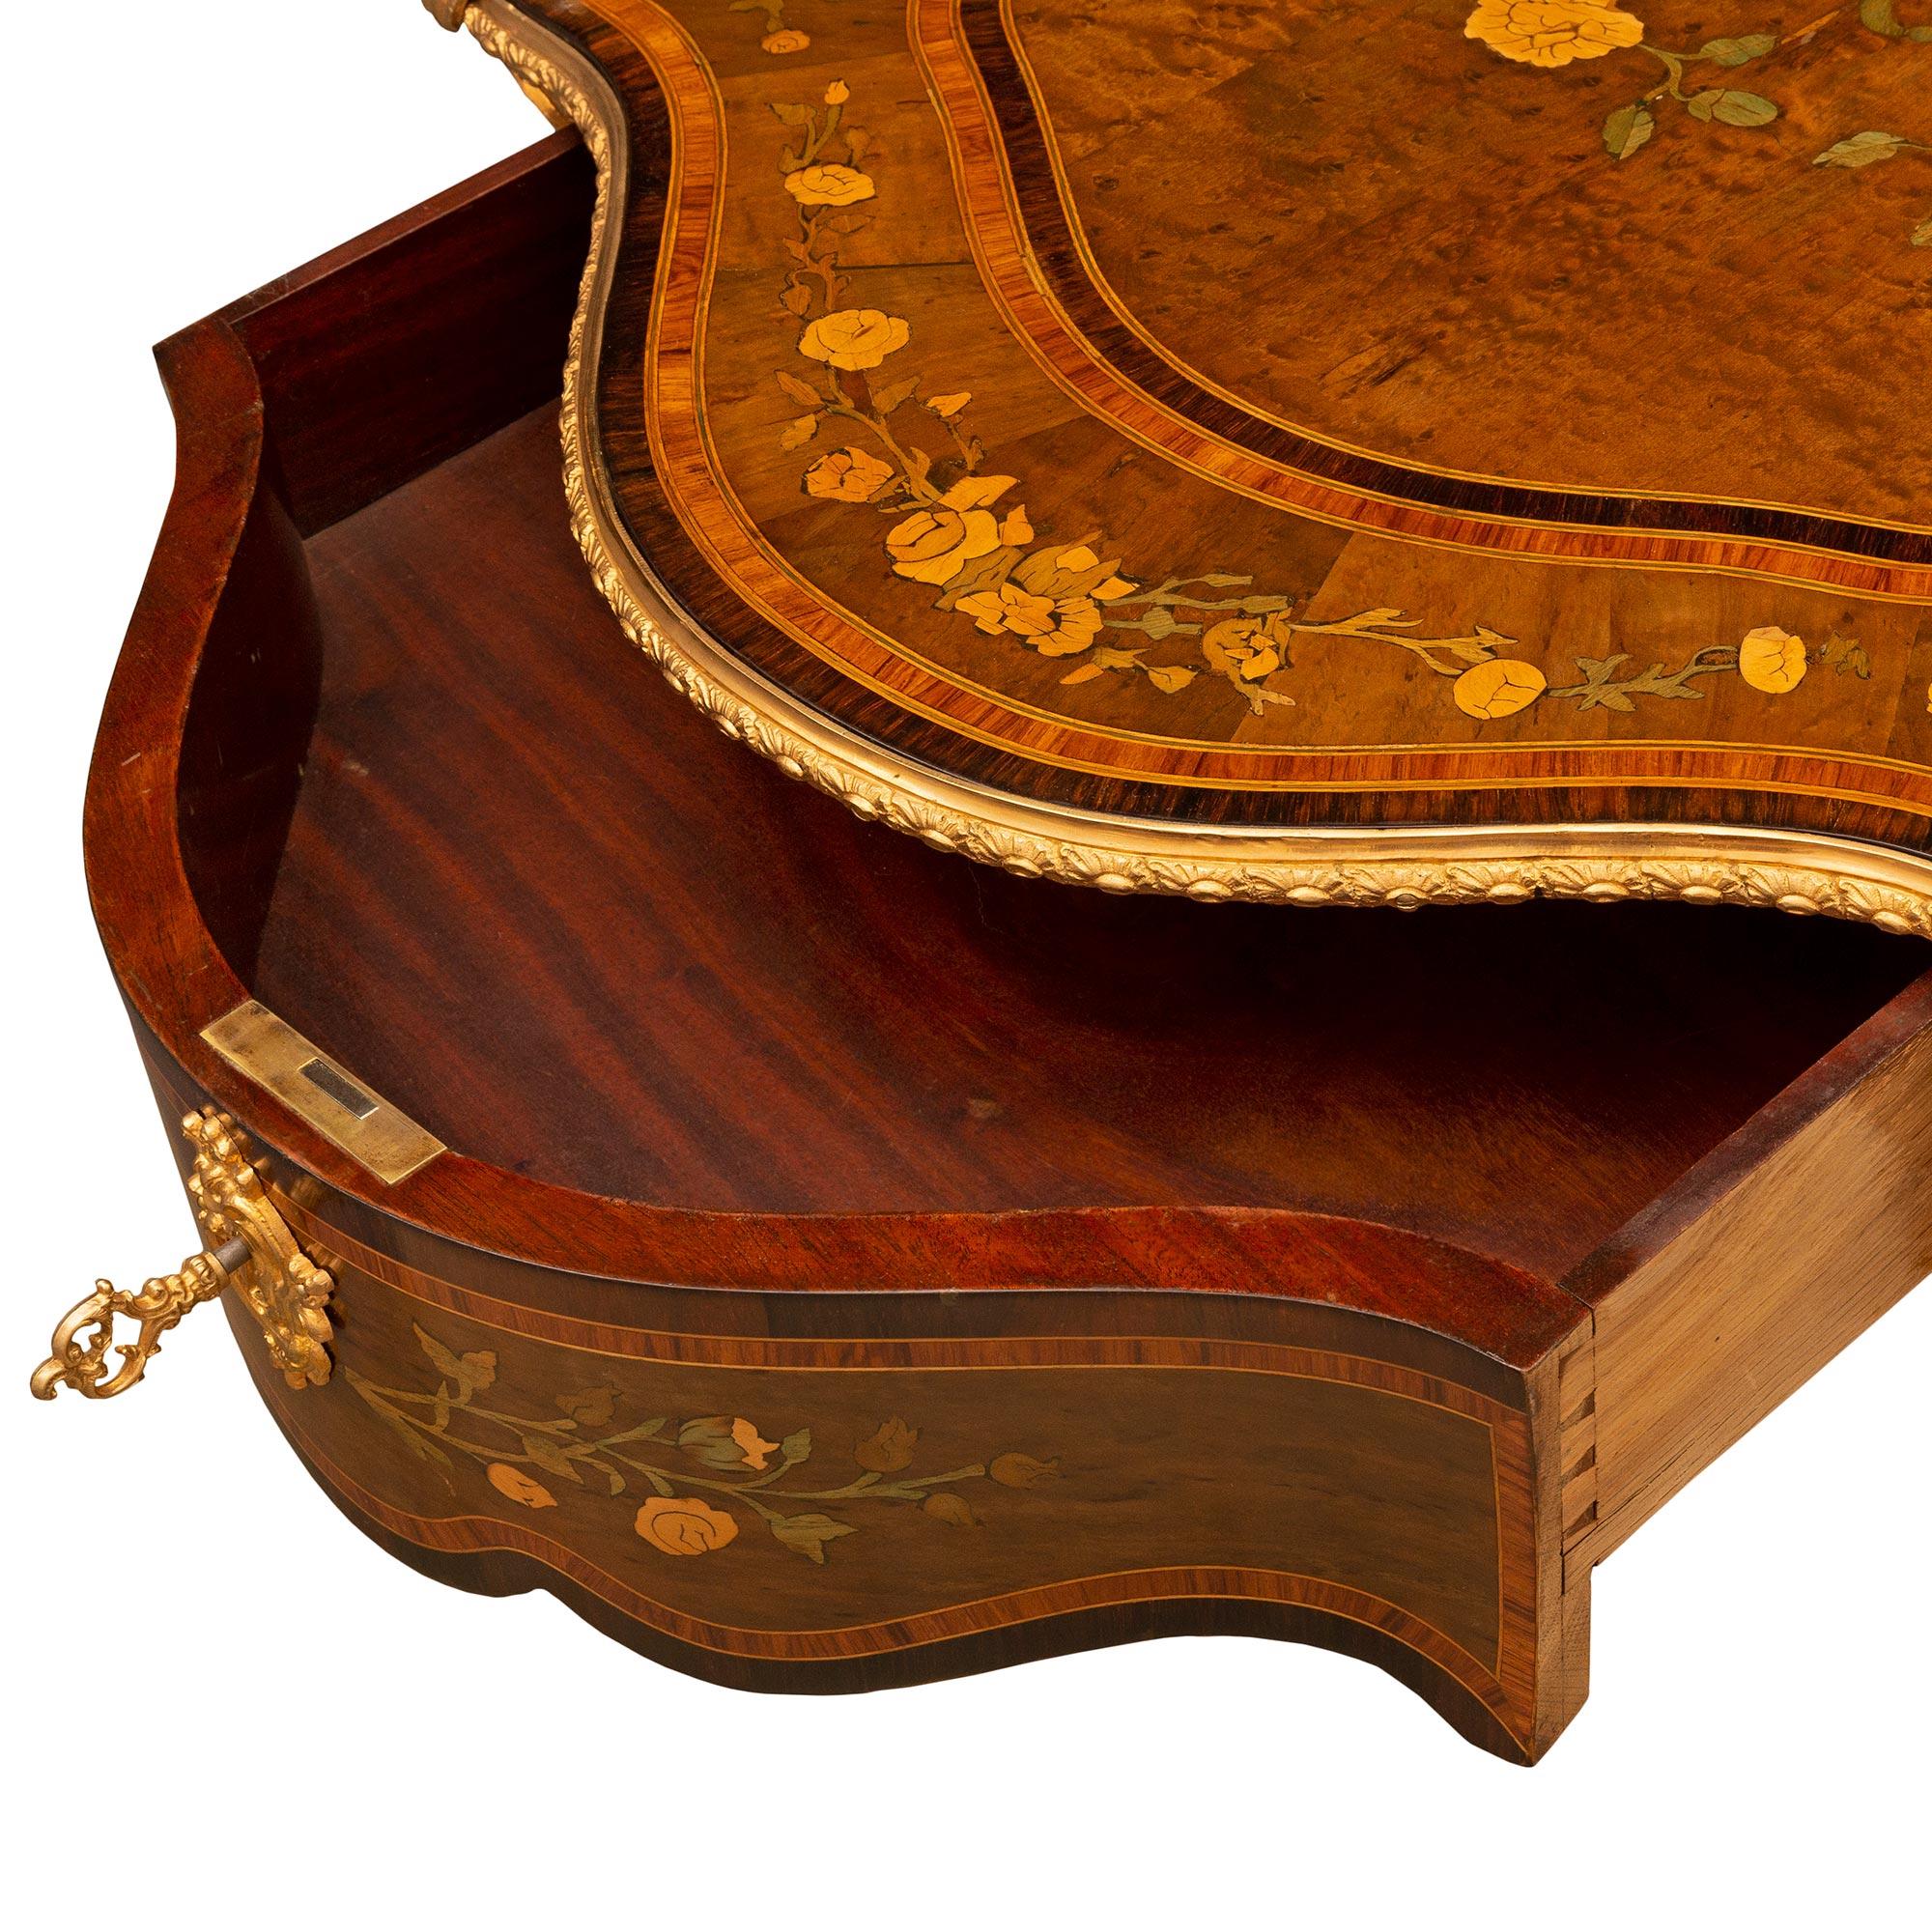 Table centrale française du XIXe siècle de style Louis XV d'époque Napoléon III en vente 4